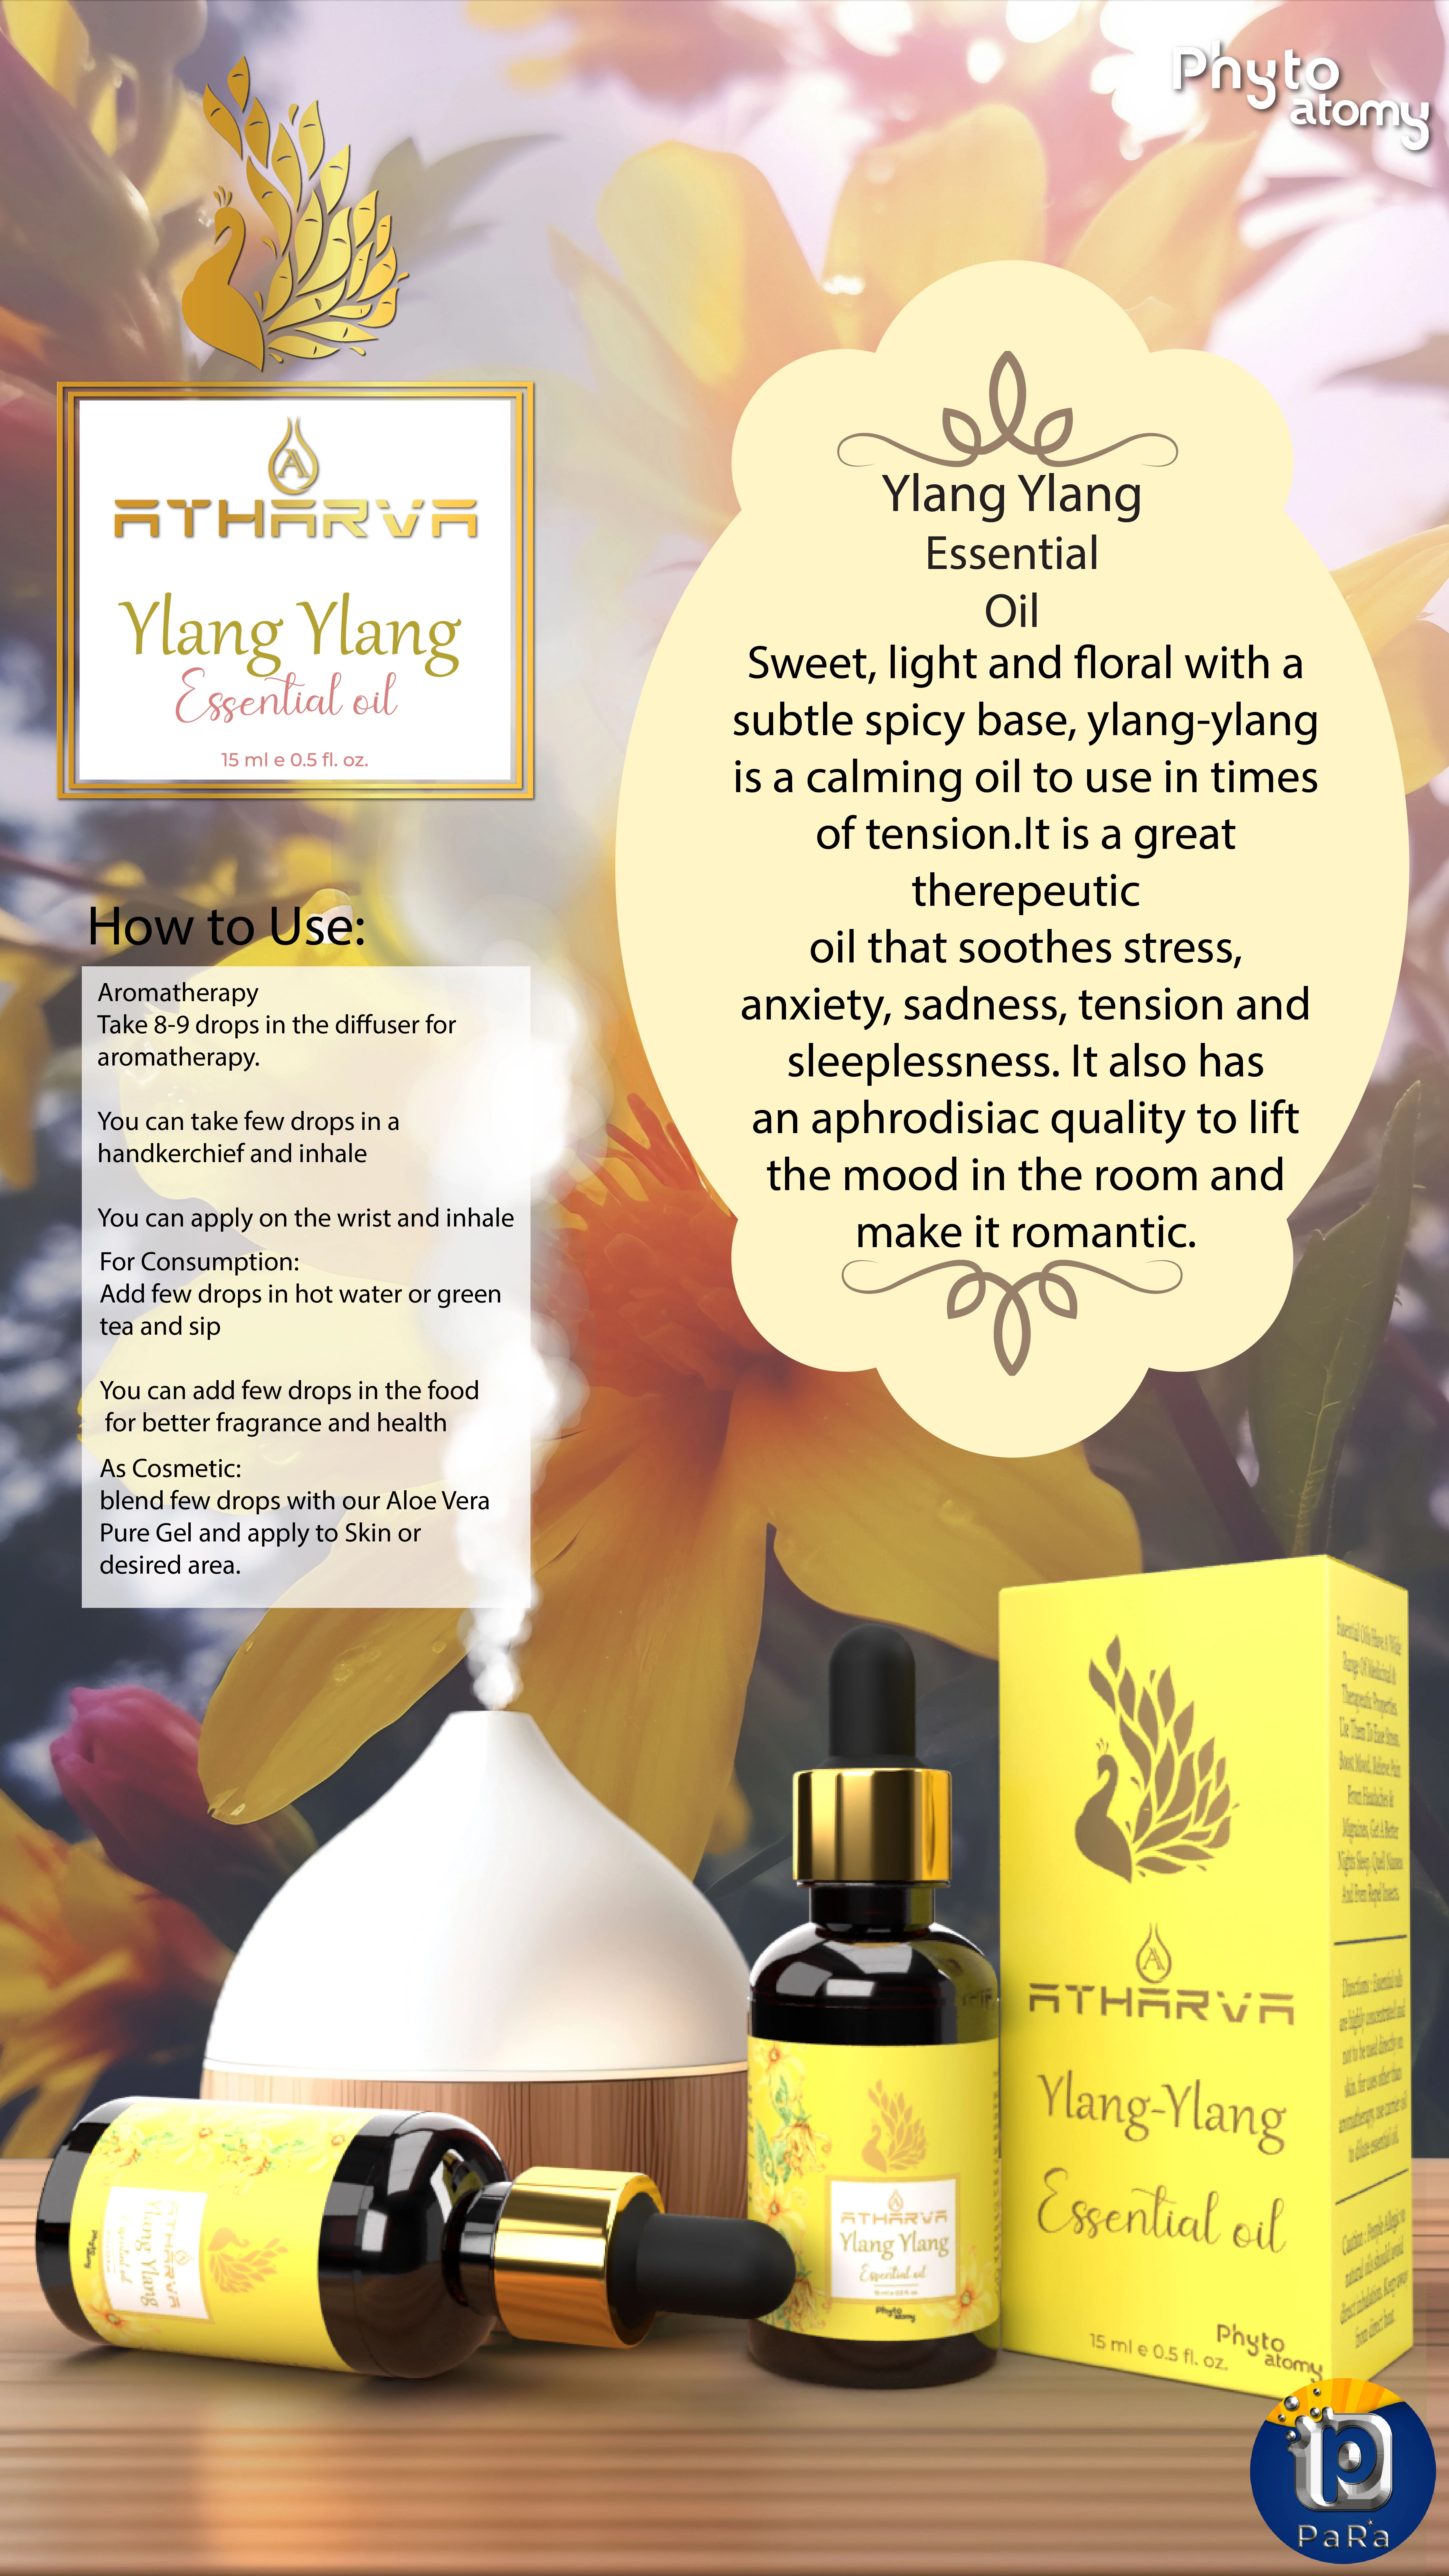 RBV B2B Atharva Ylang Ylang Essential Oil (15ml)-12 Pcs.